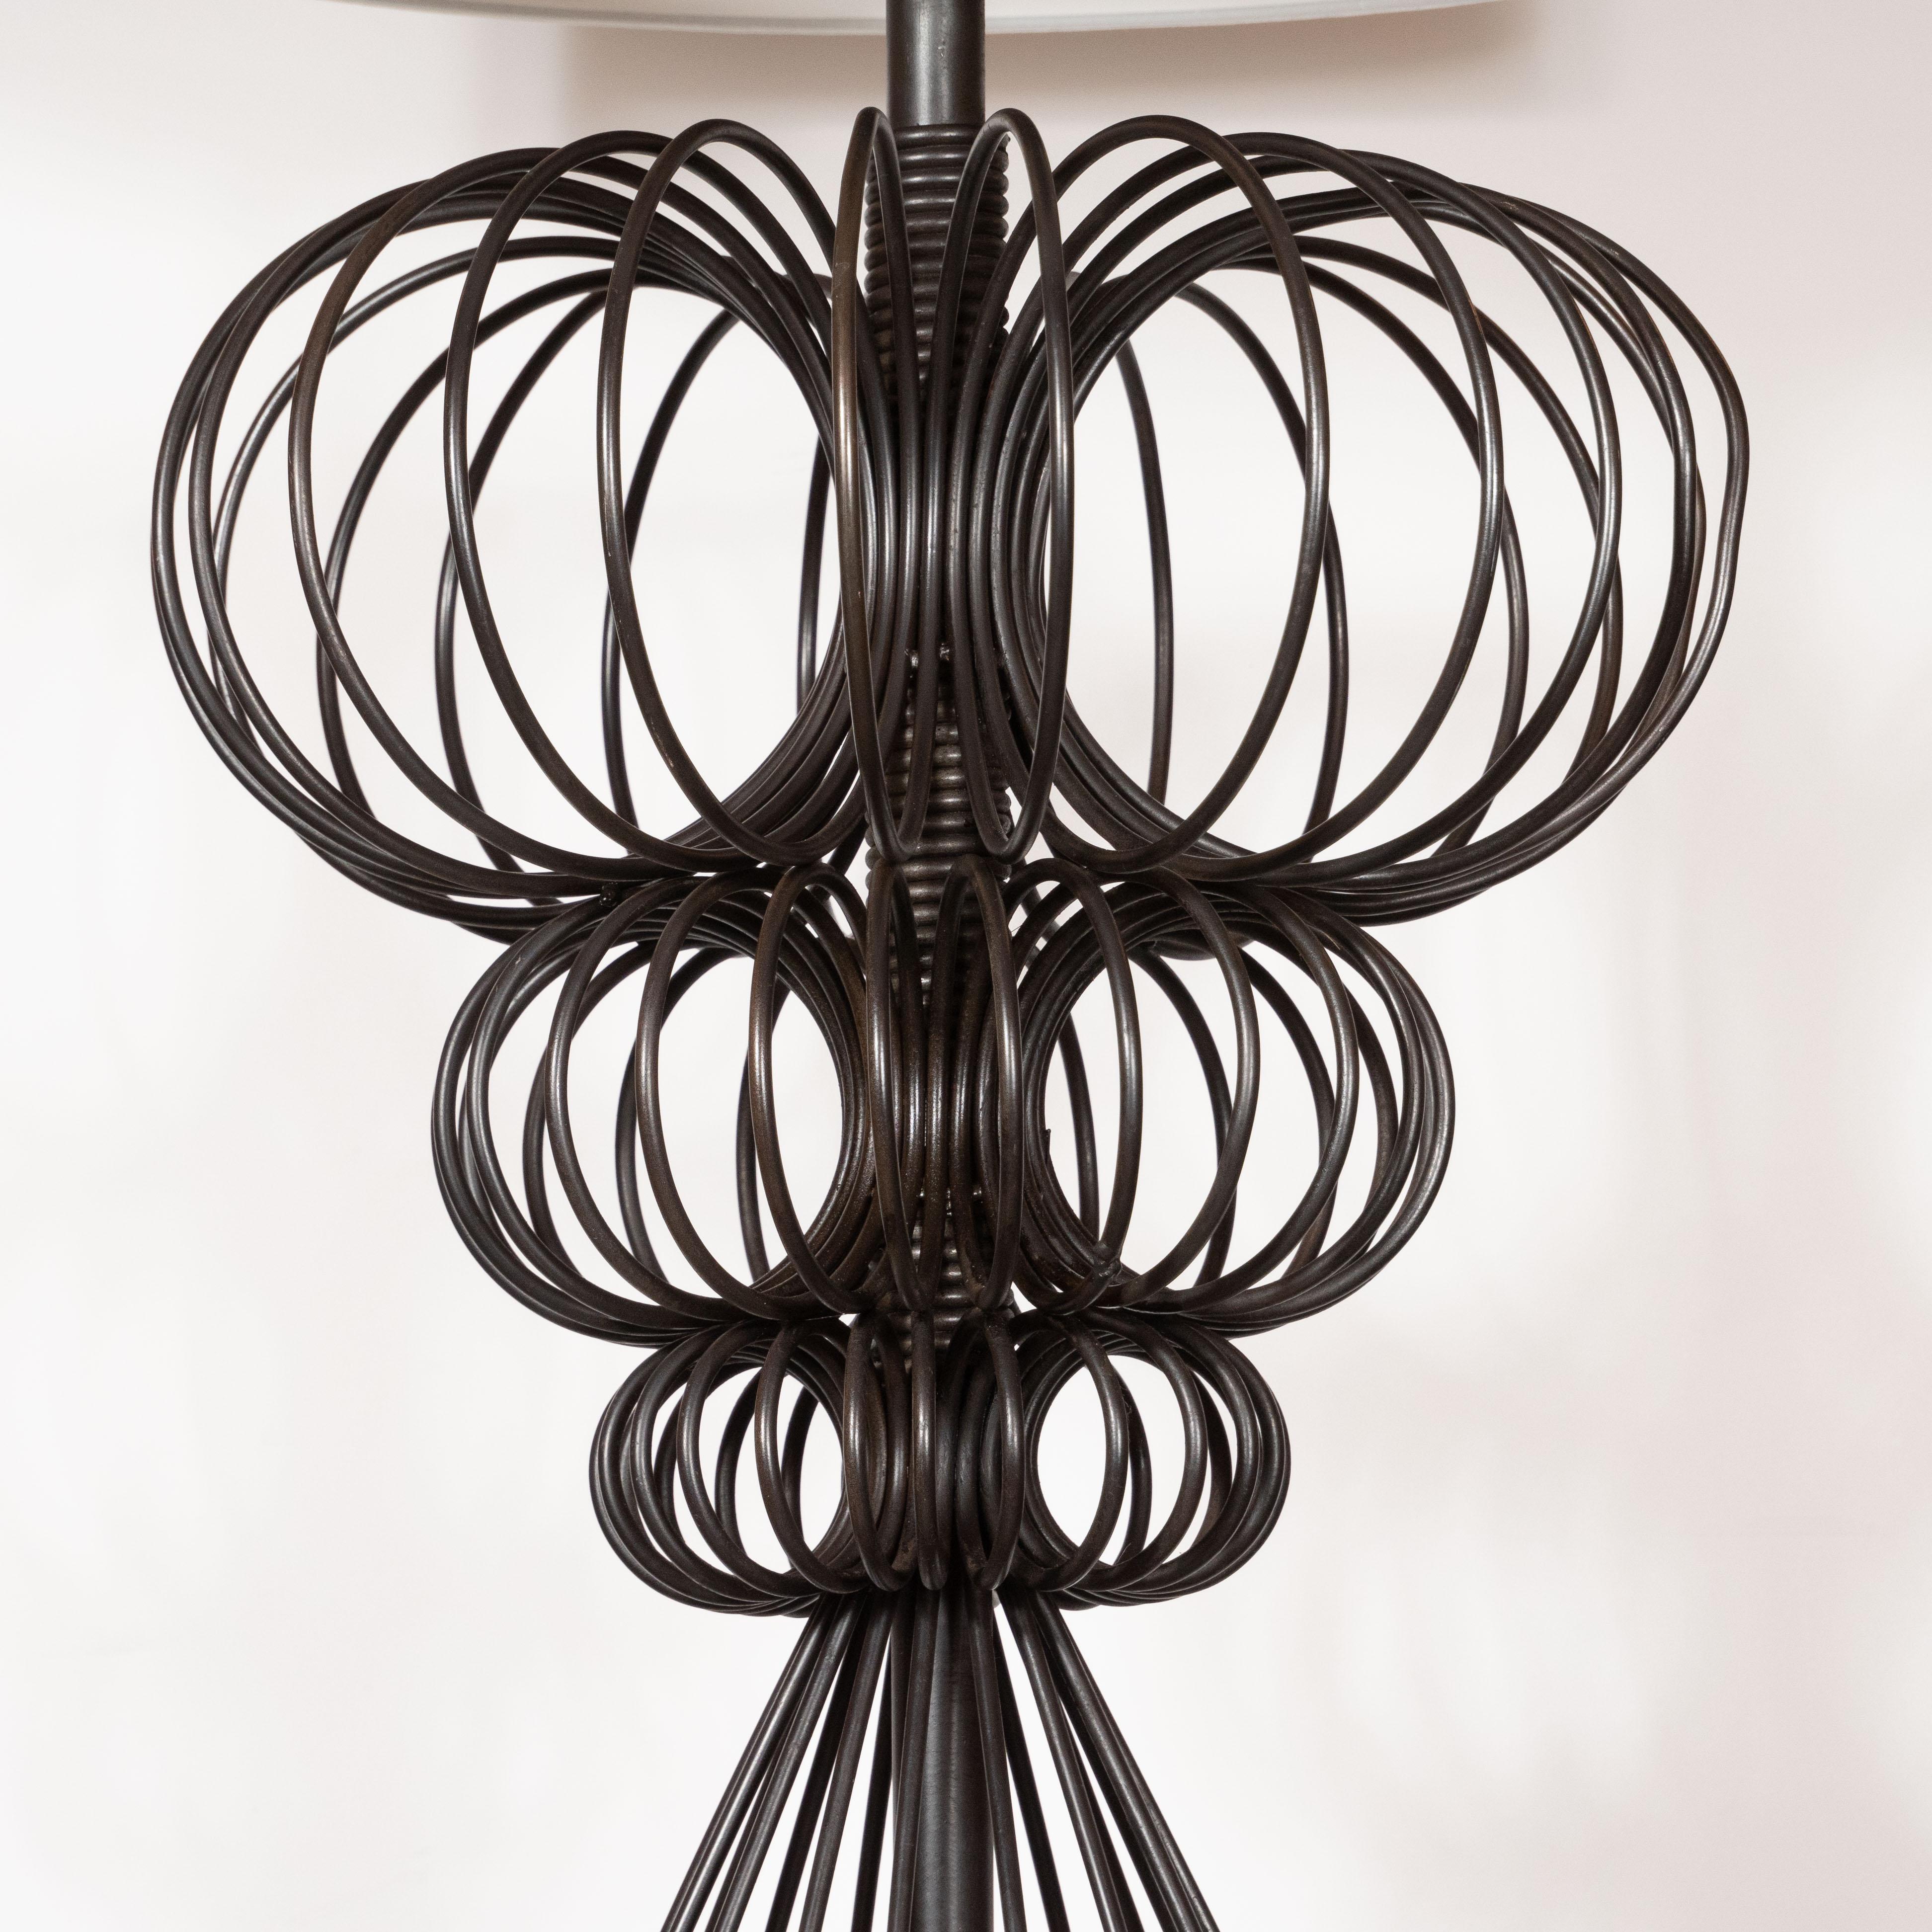 American Mid-Century Modern Sculptural Black Iron Floor Lamp